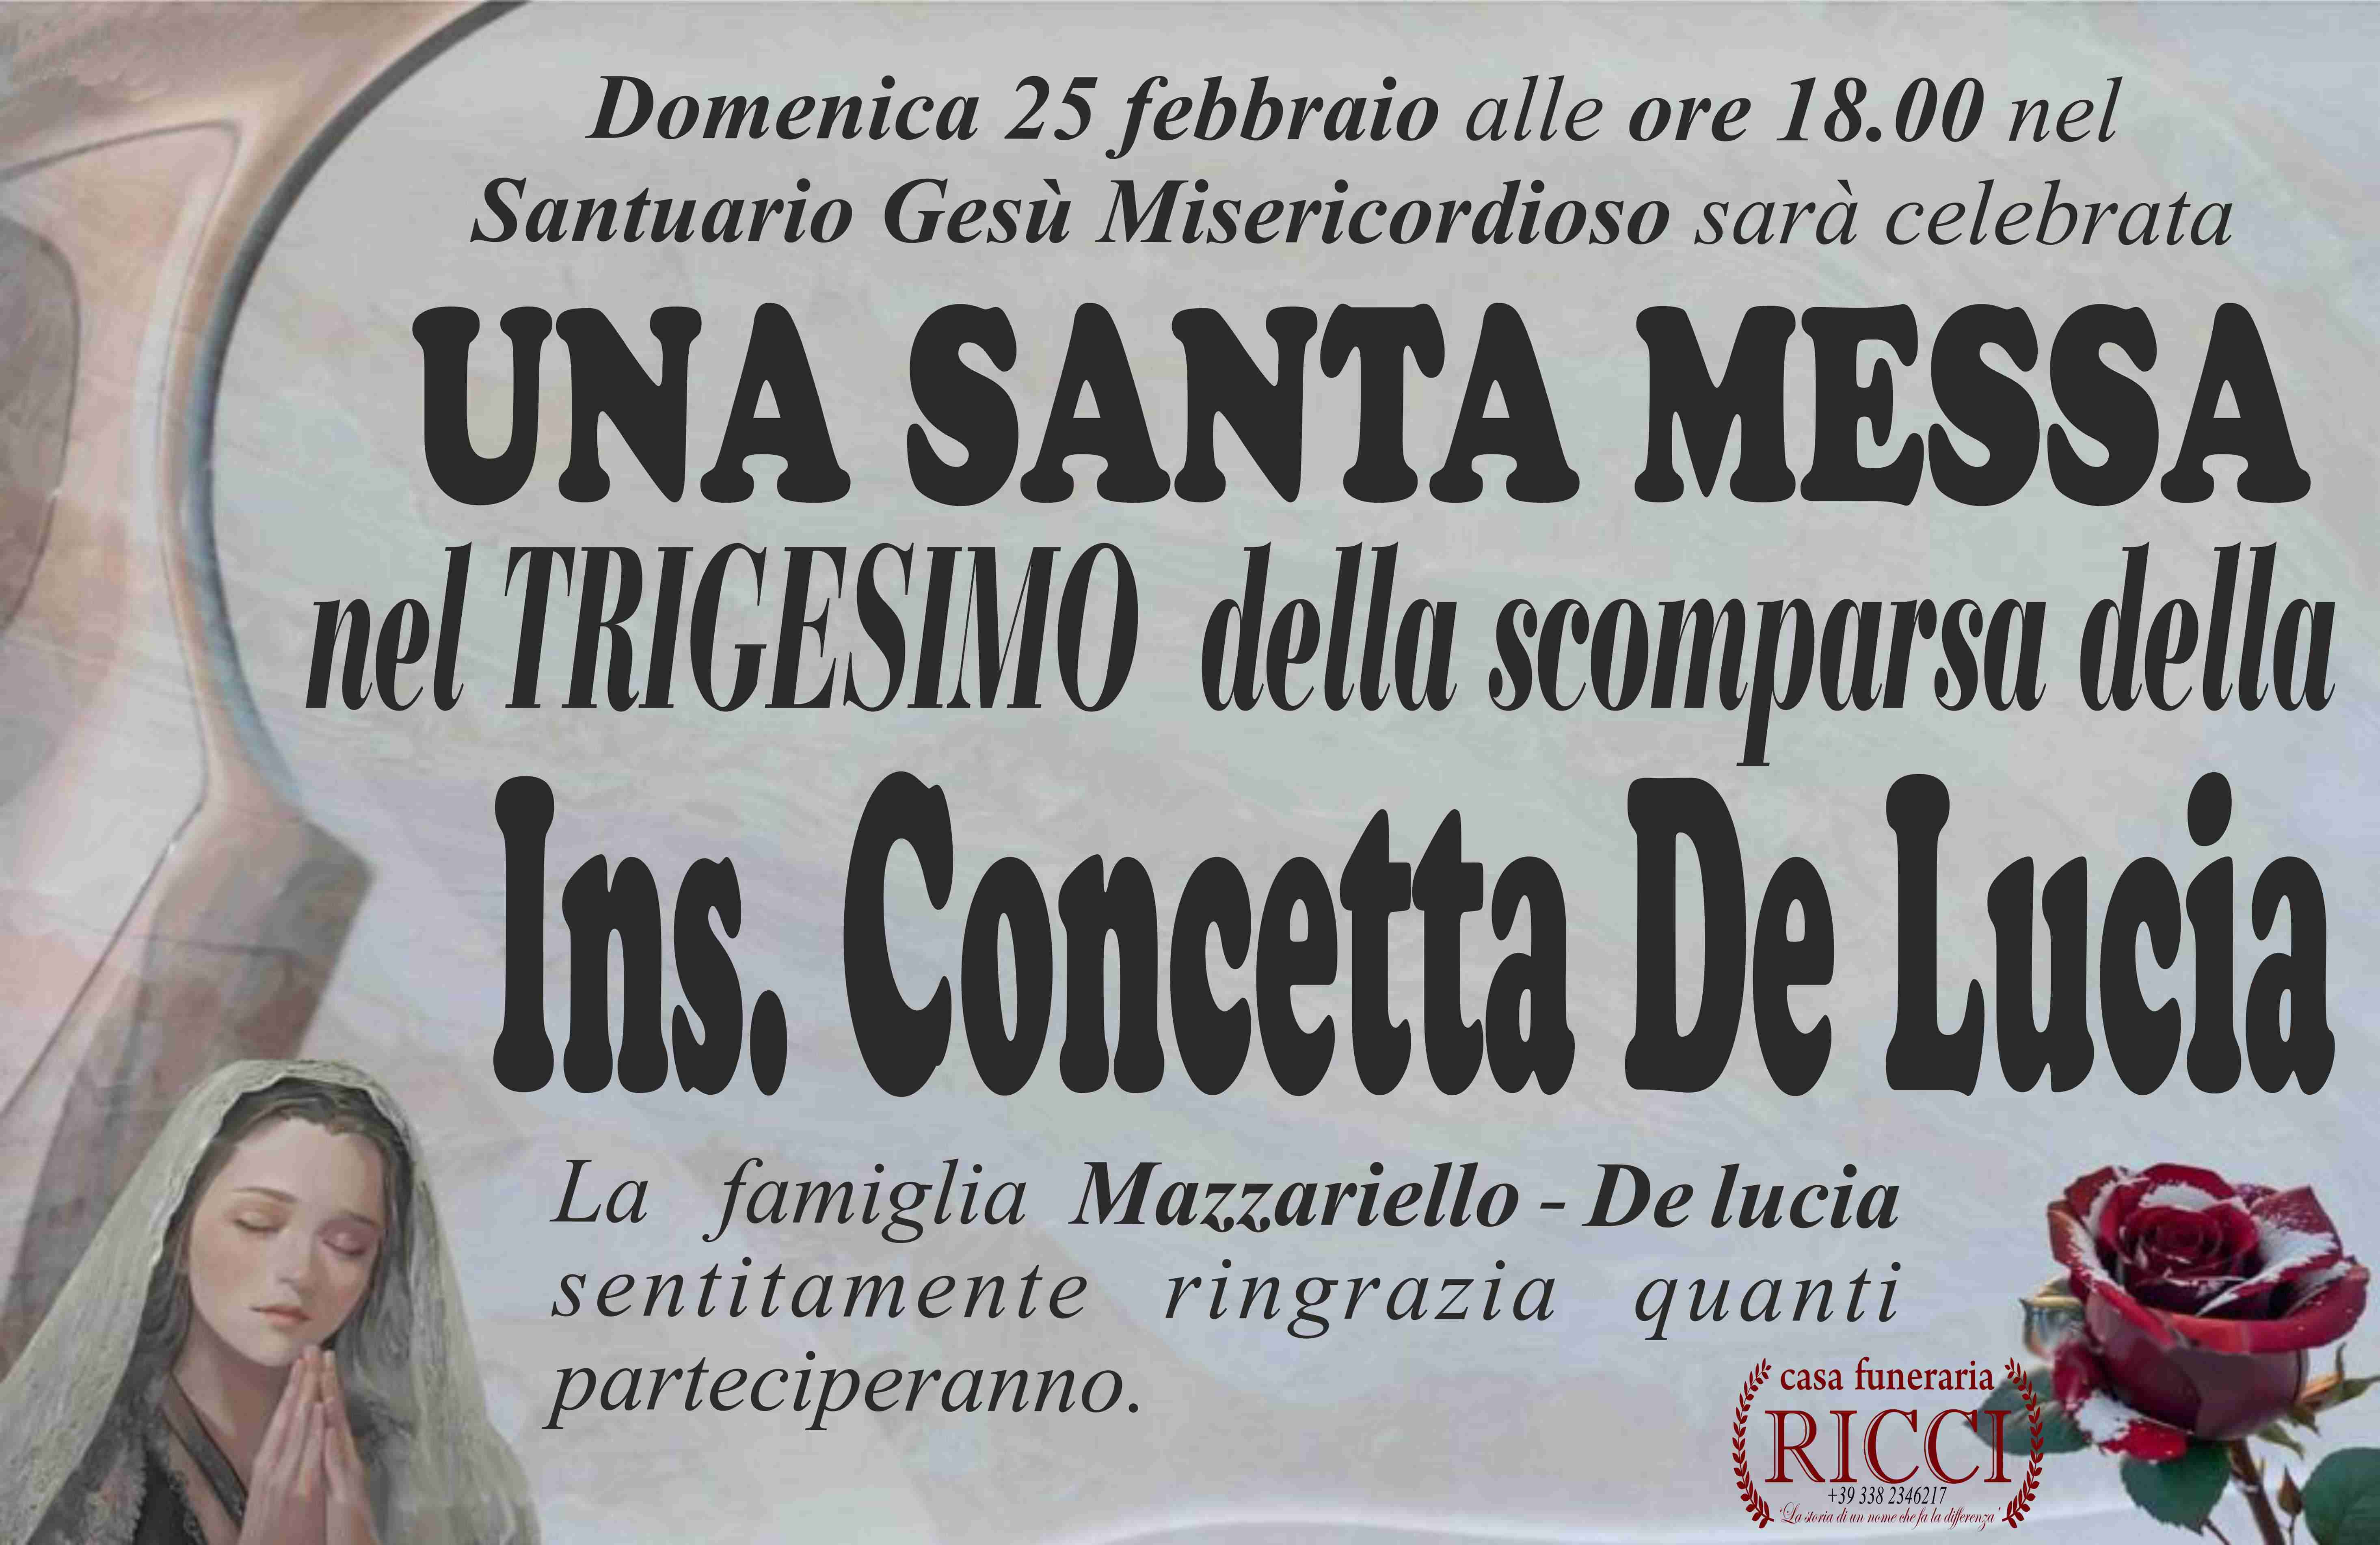 Concetta De Lucia